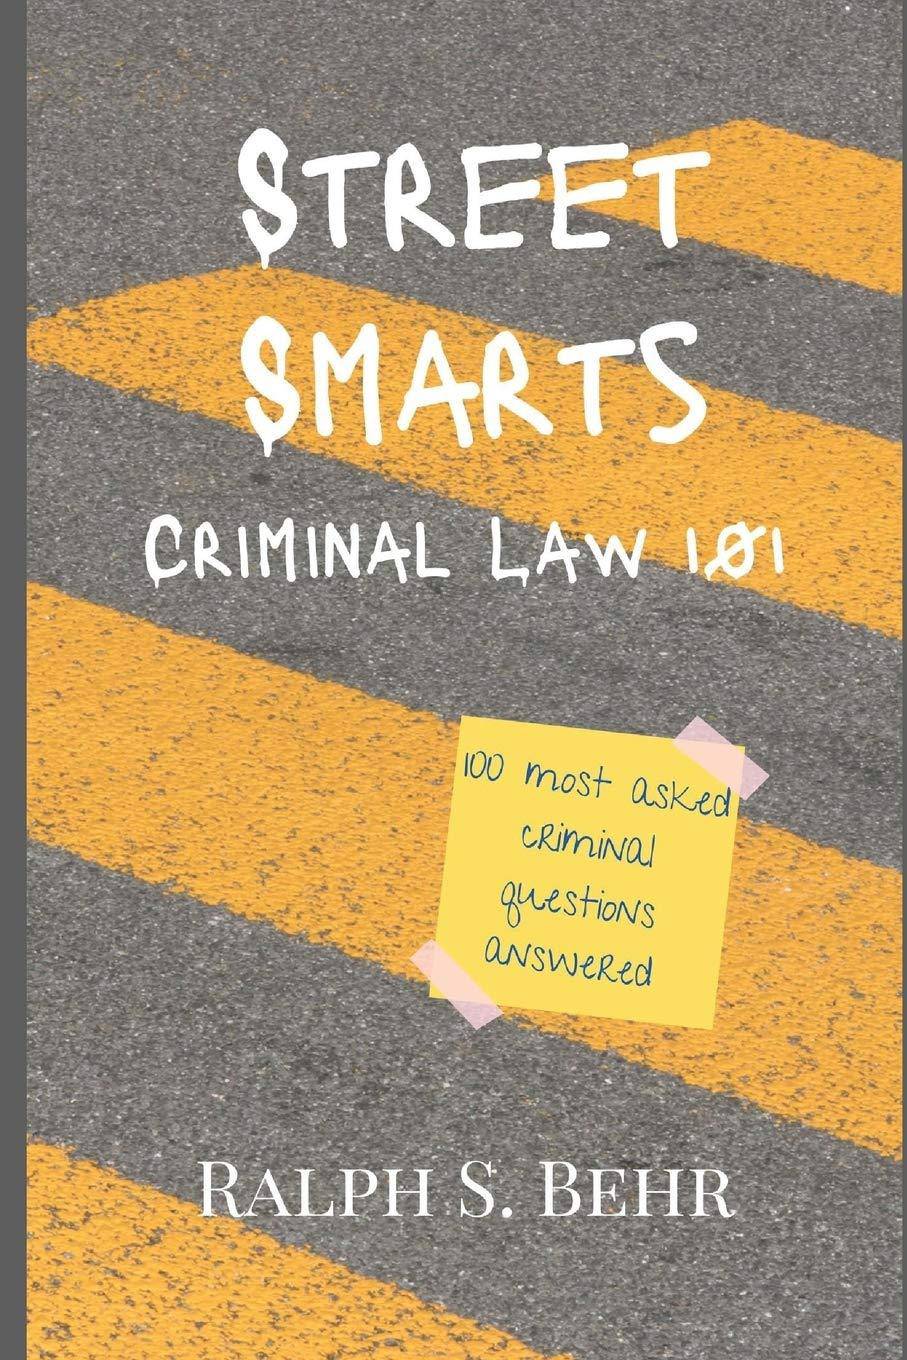 CRIMINAL LAW STREET SMARTS 1.01 - SureShot Books Publishing LLC